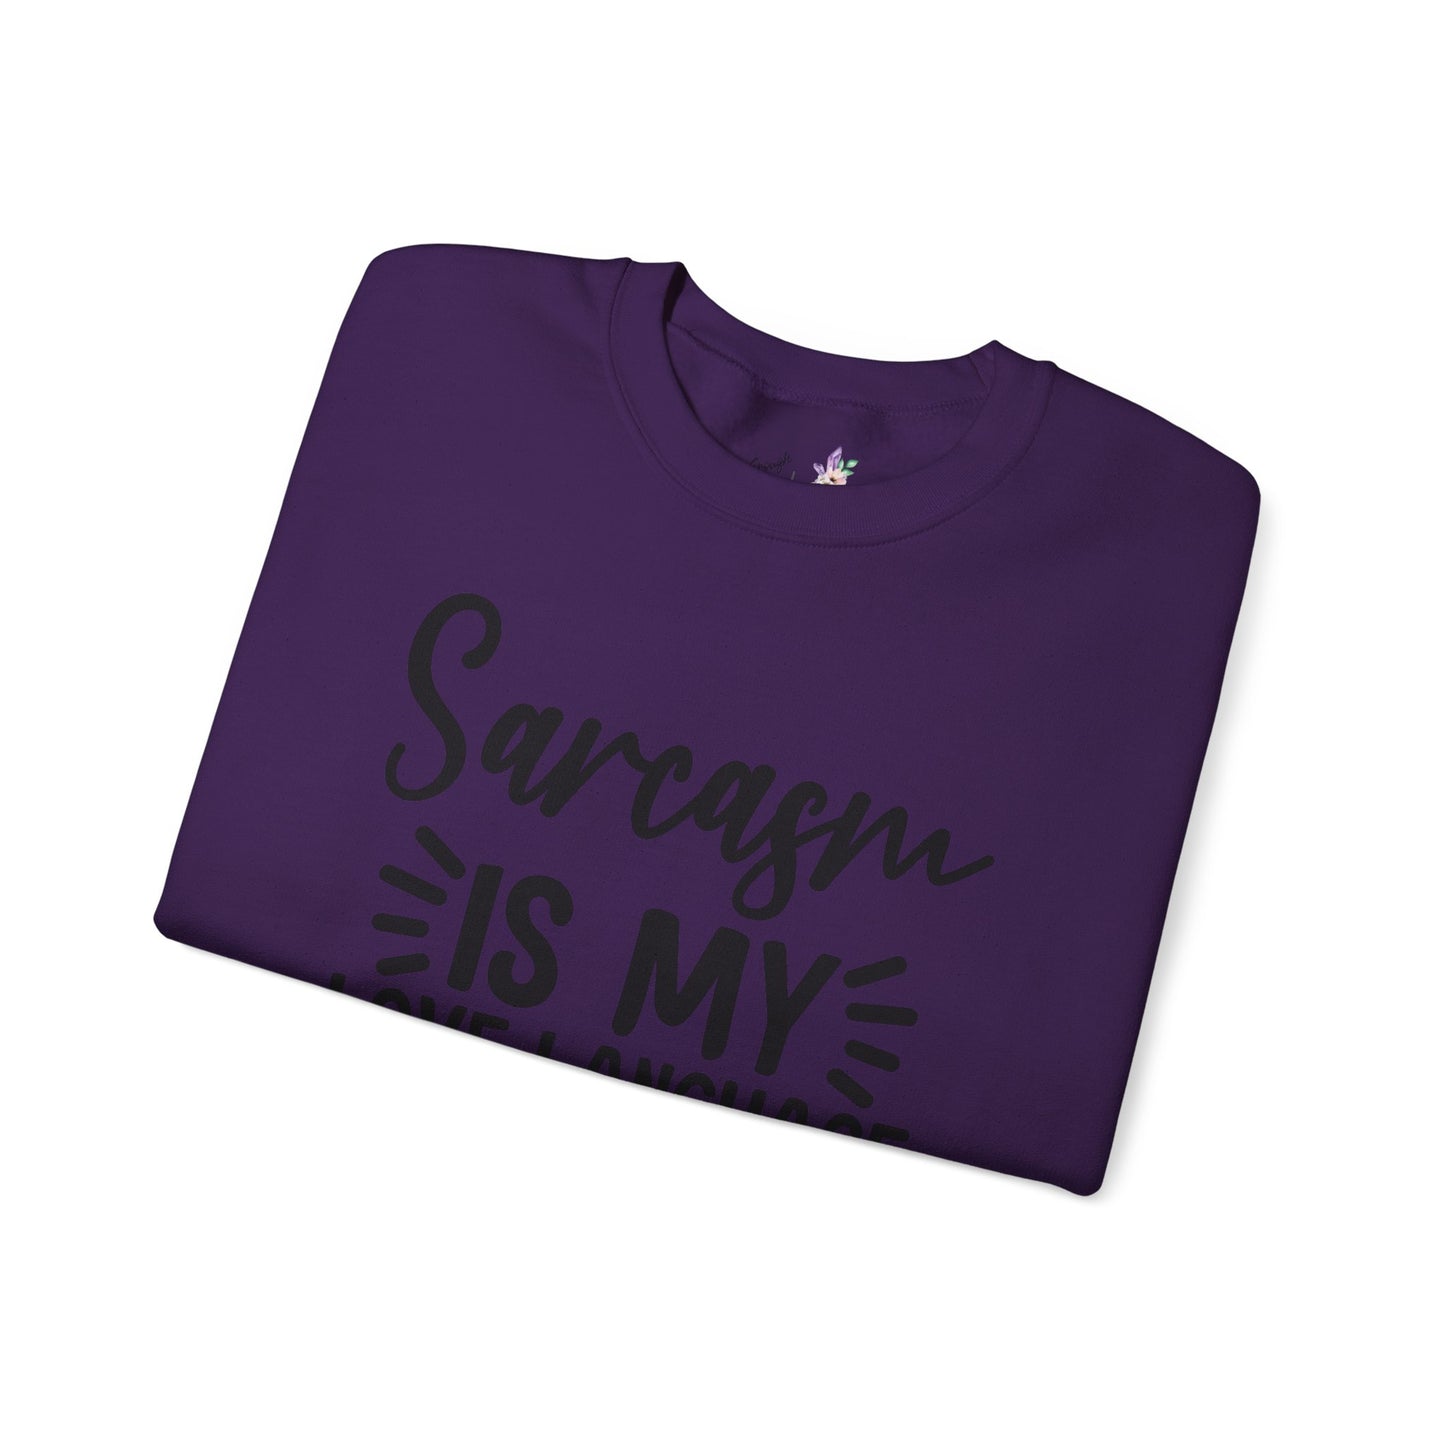 Sarcasm is my Love Language Unisex Heavy Blend™ Crewneck Sweatshirt